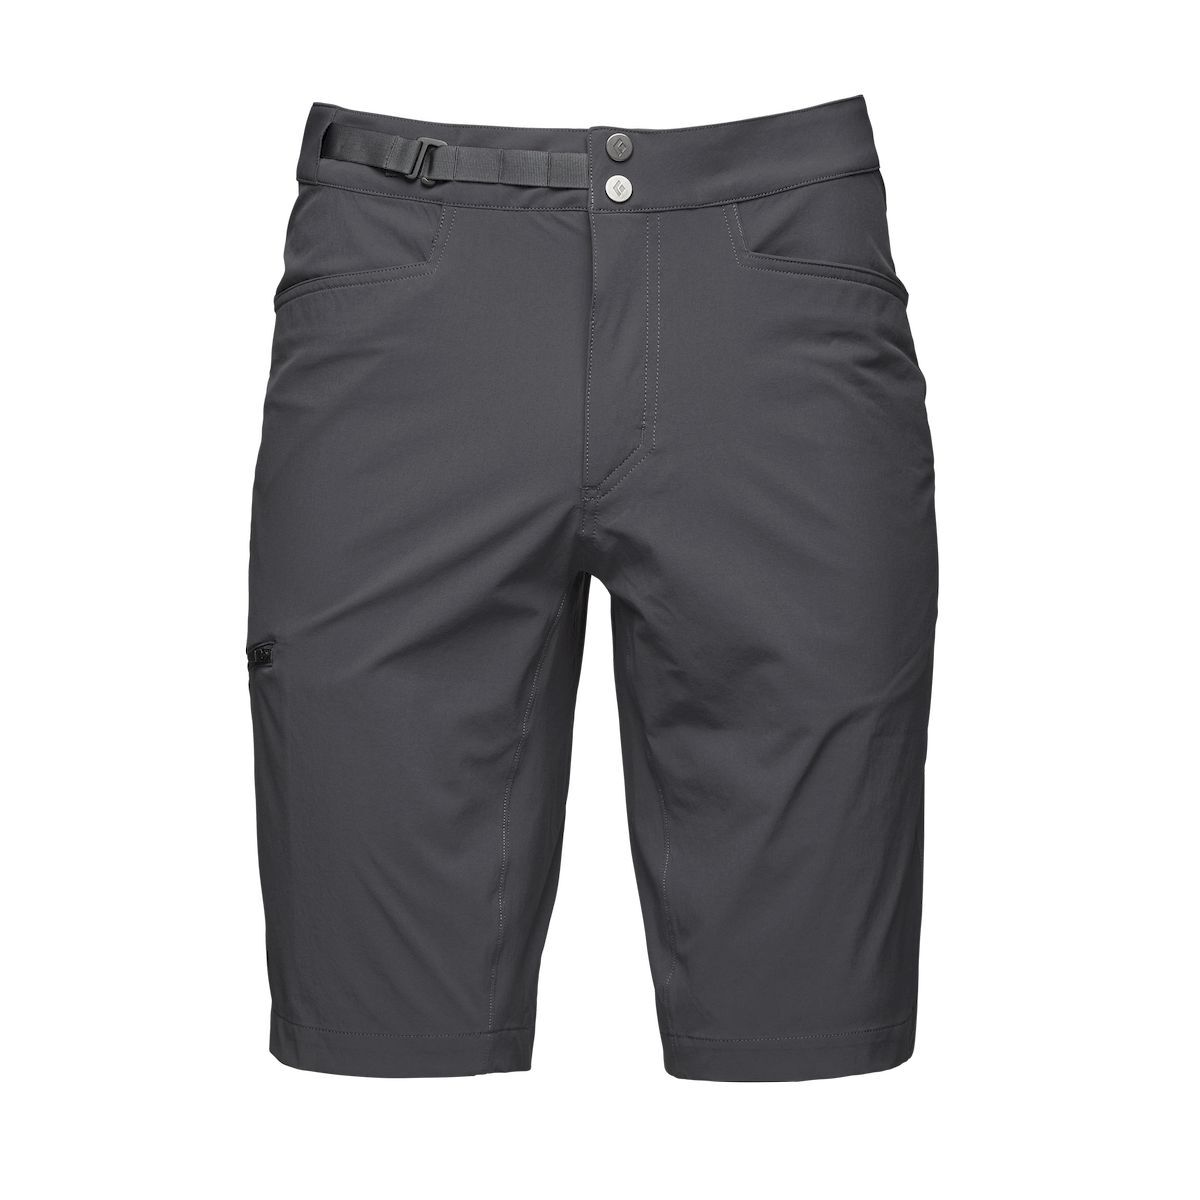 Black Diamond Valley Shorts - Climbing shorts - Men's